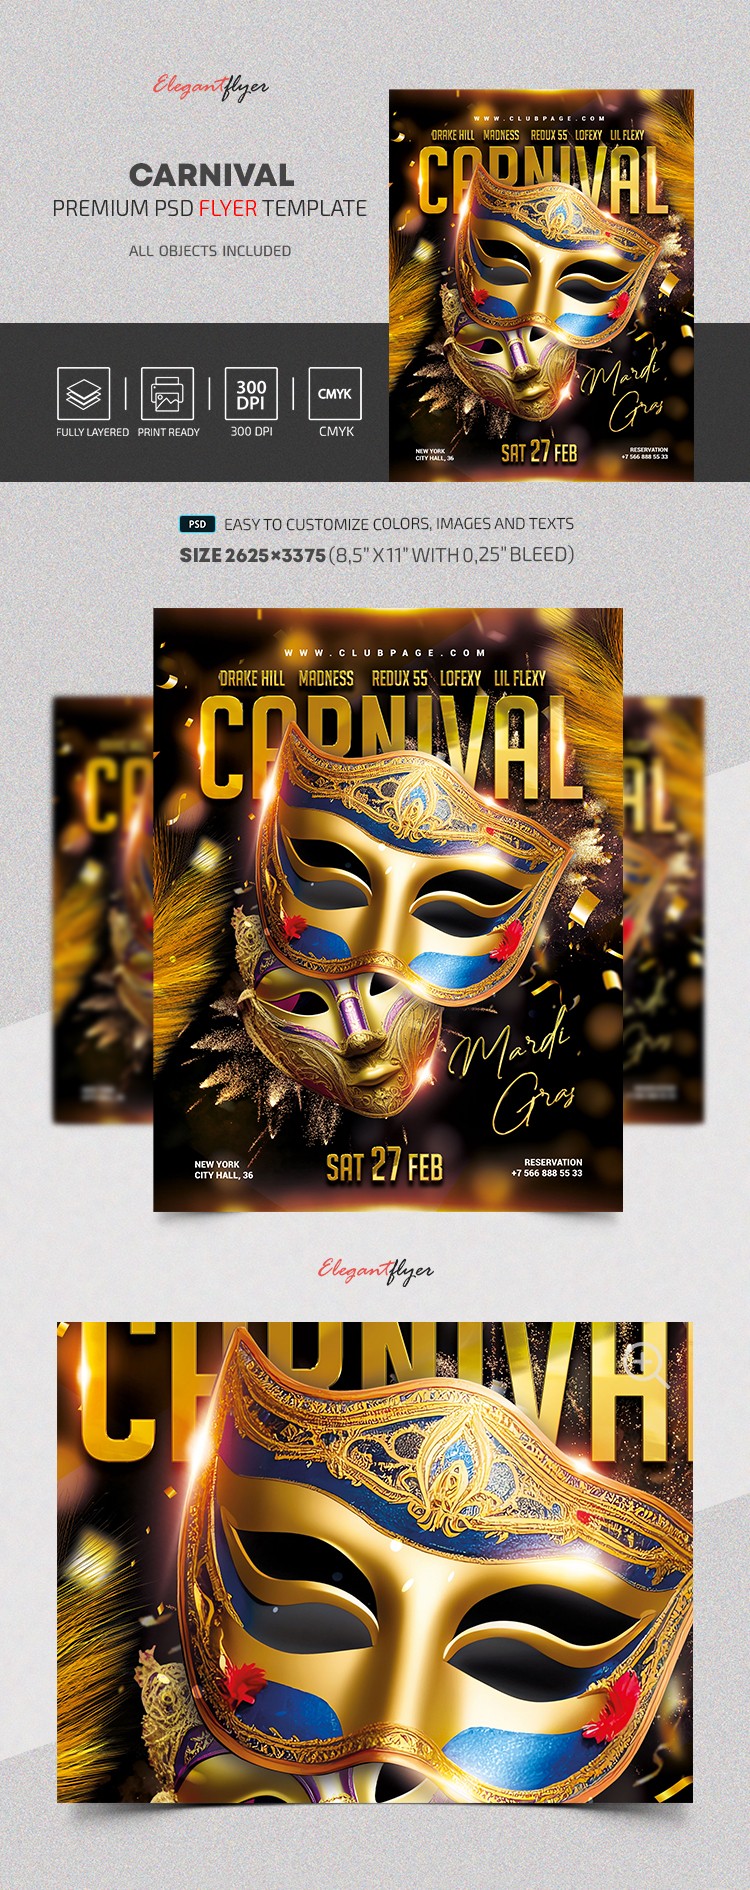 Carnival Flyer by ElegantFlyer